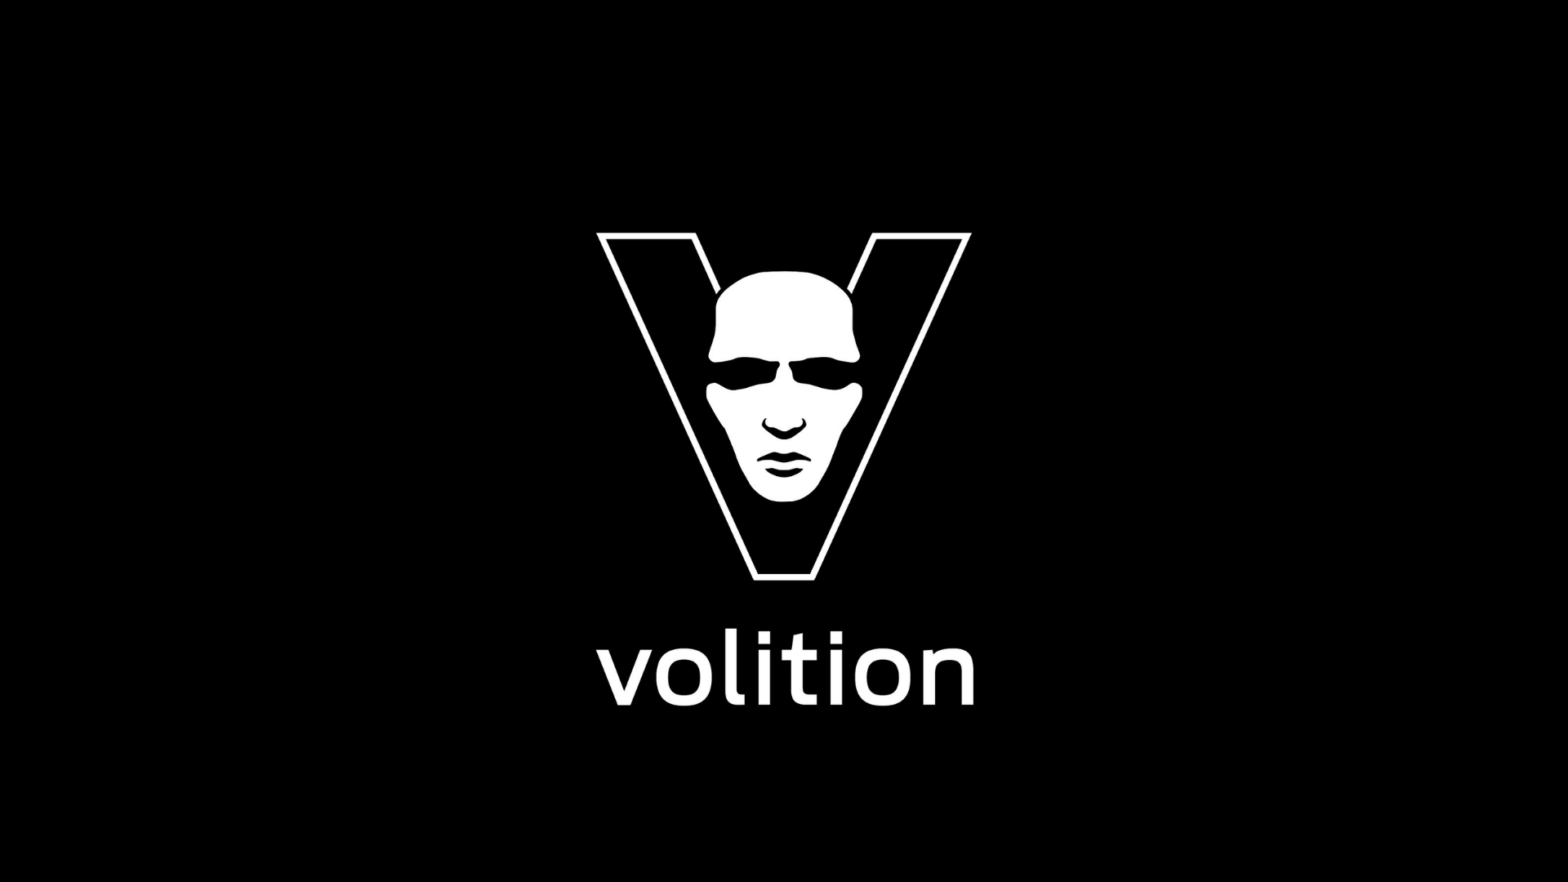 Saints Row's 2022 reboot won't skimp on the mayhem, Volition vows - Polygon